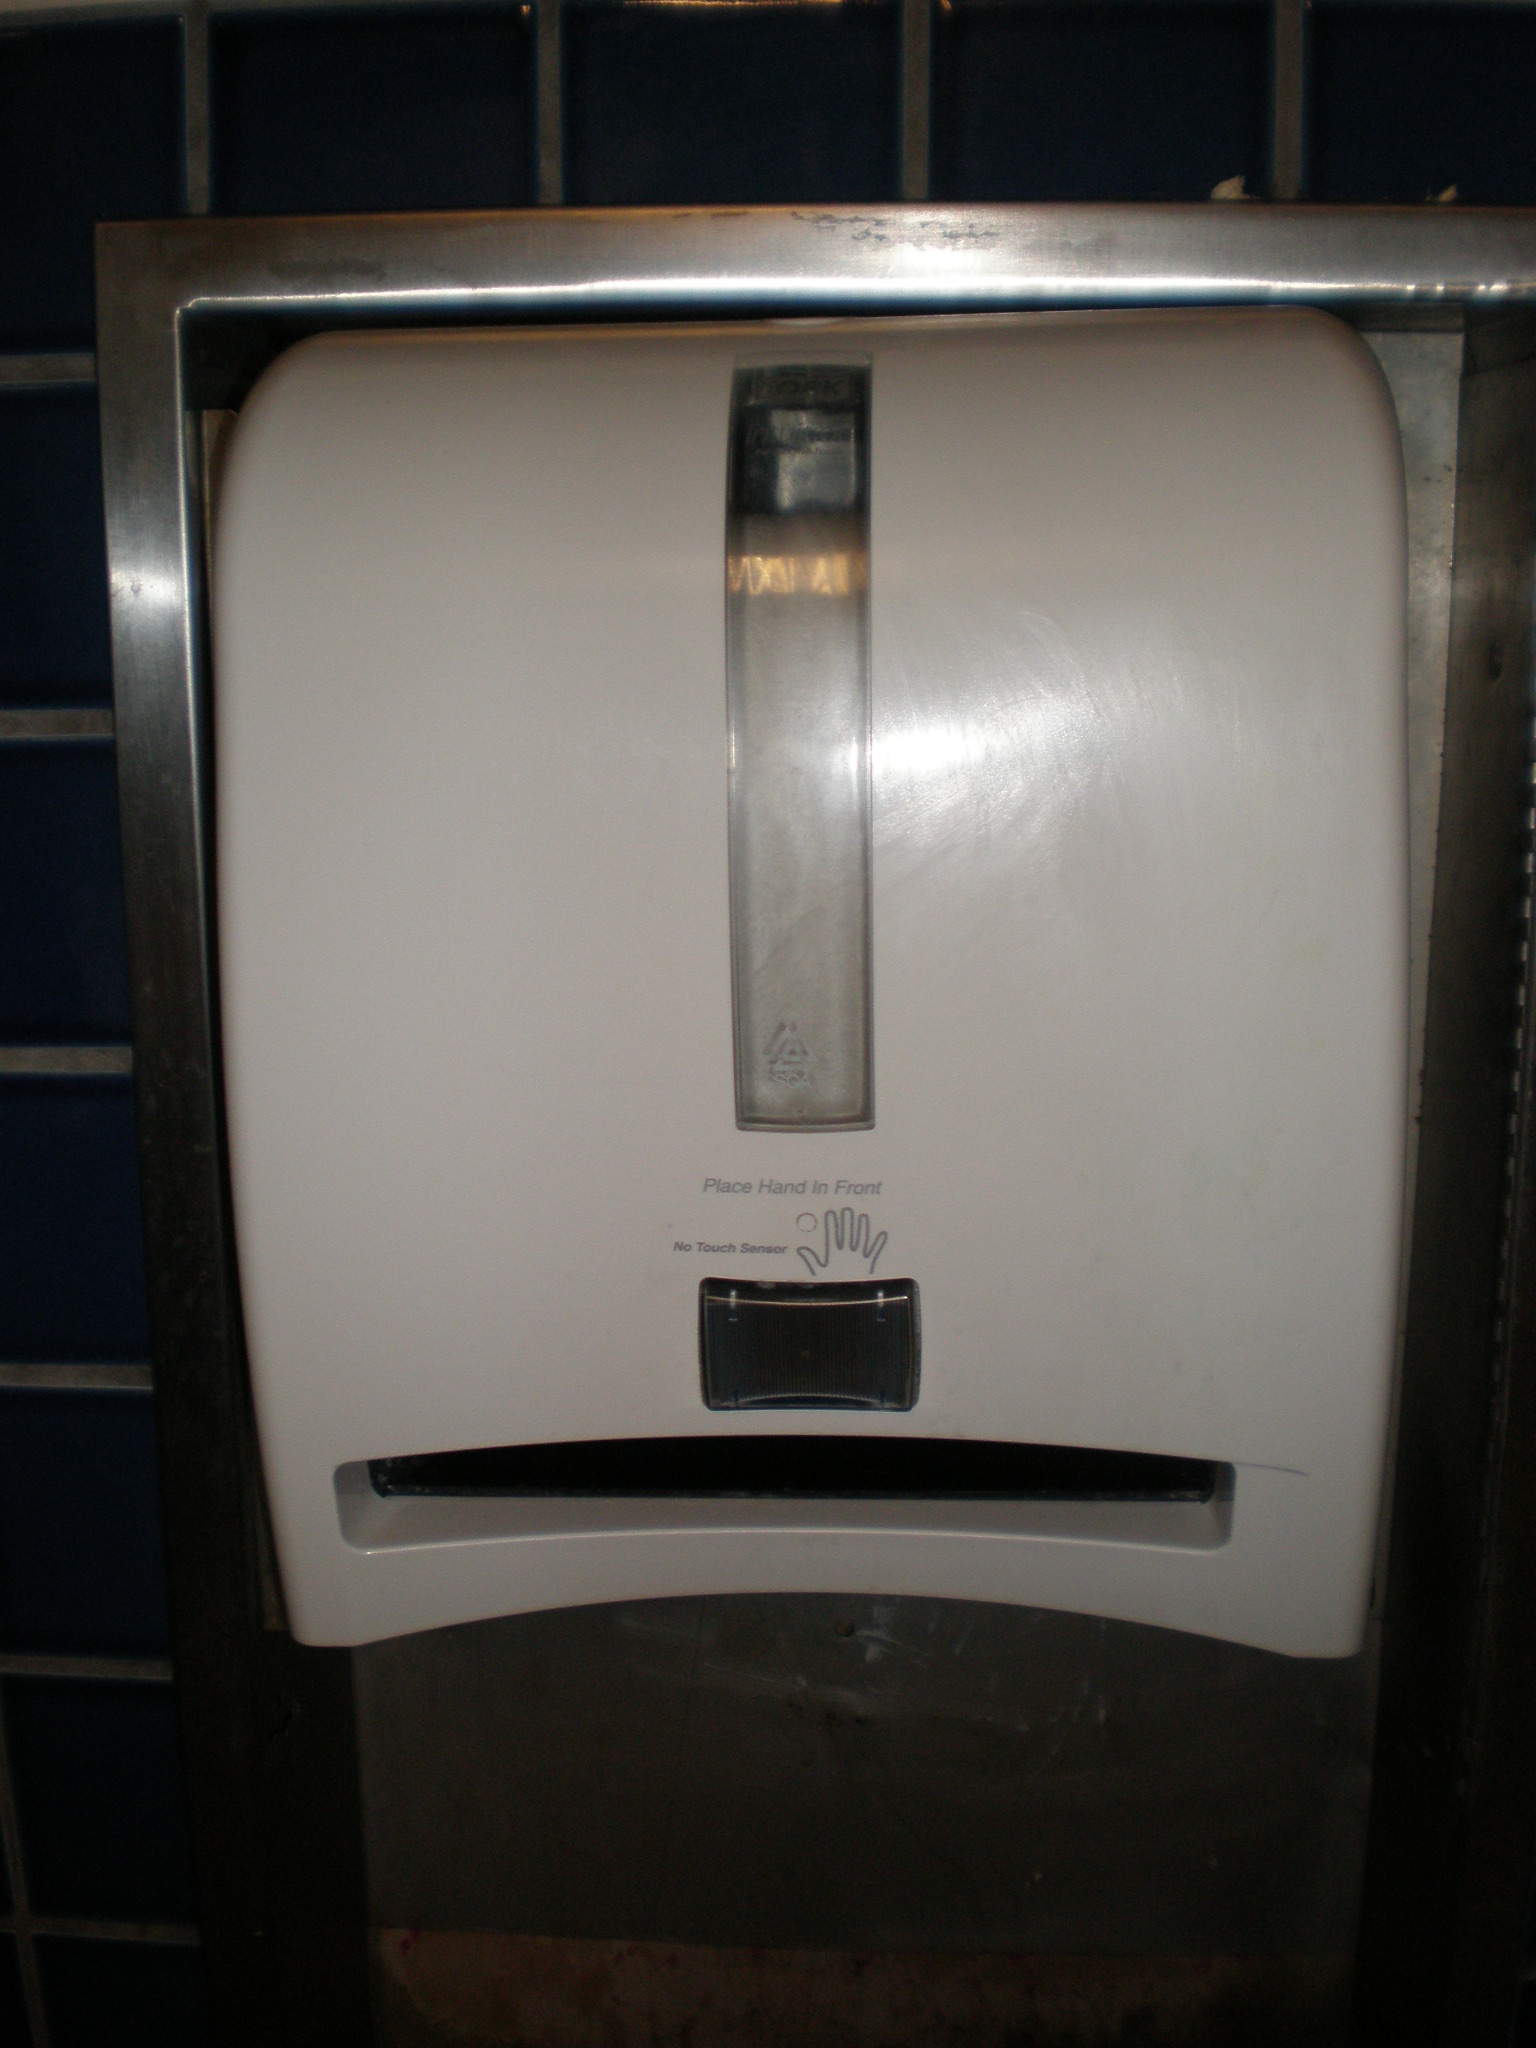 Paper-towel dispenser - Wikipedia